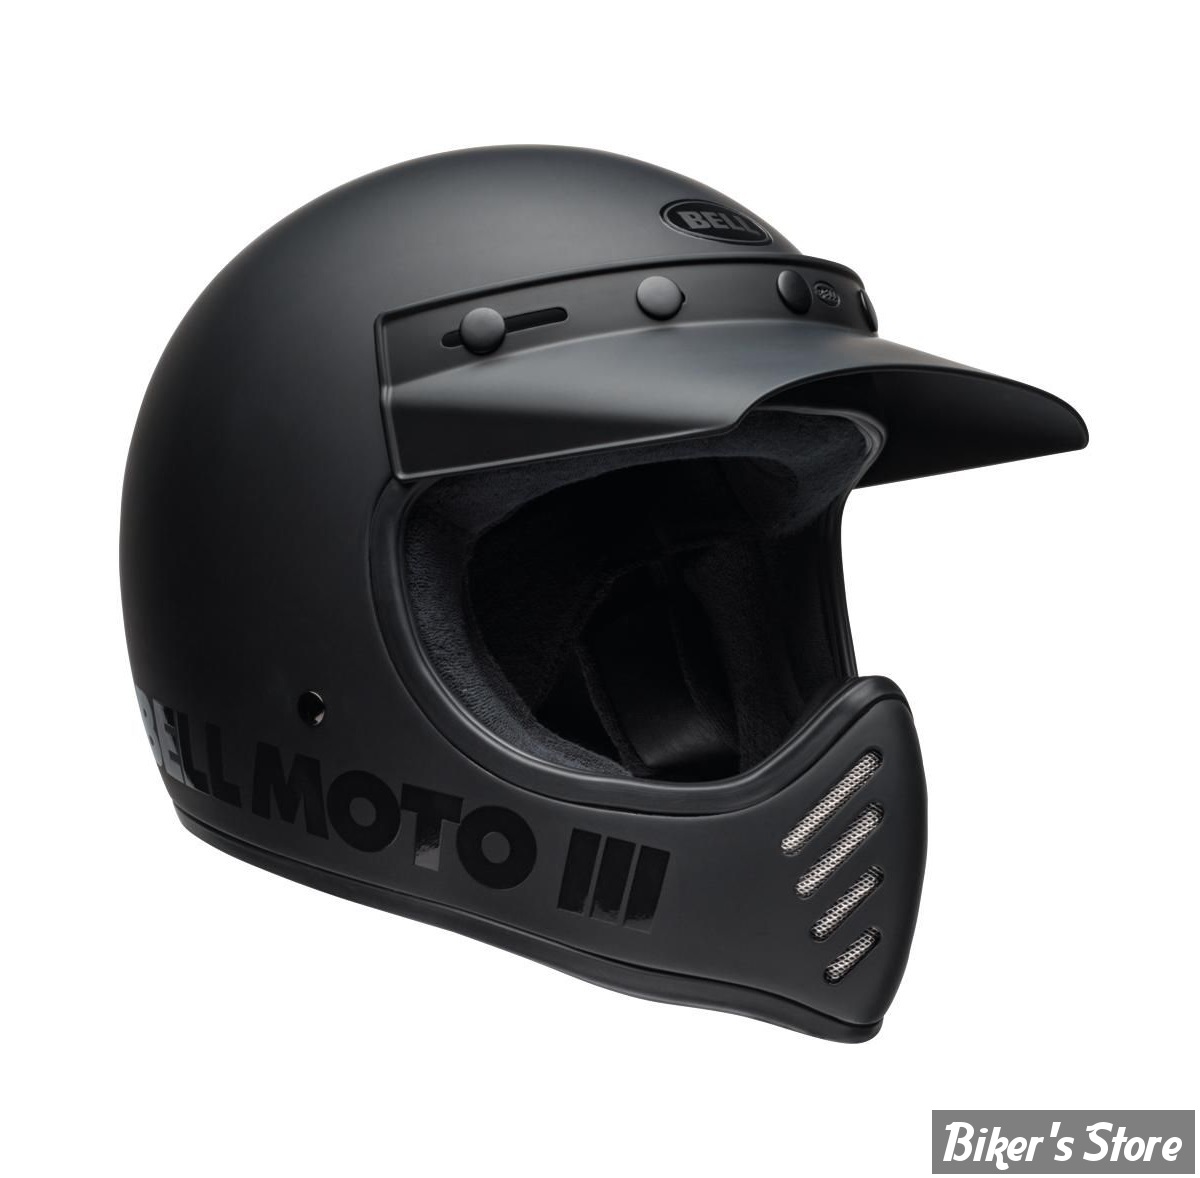 - CASQUE INTEGRAL - BELL - Moto-3 Retro Dirt Bike Helmet - COULEUR : NOIR MAT - TAILLE : S